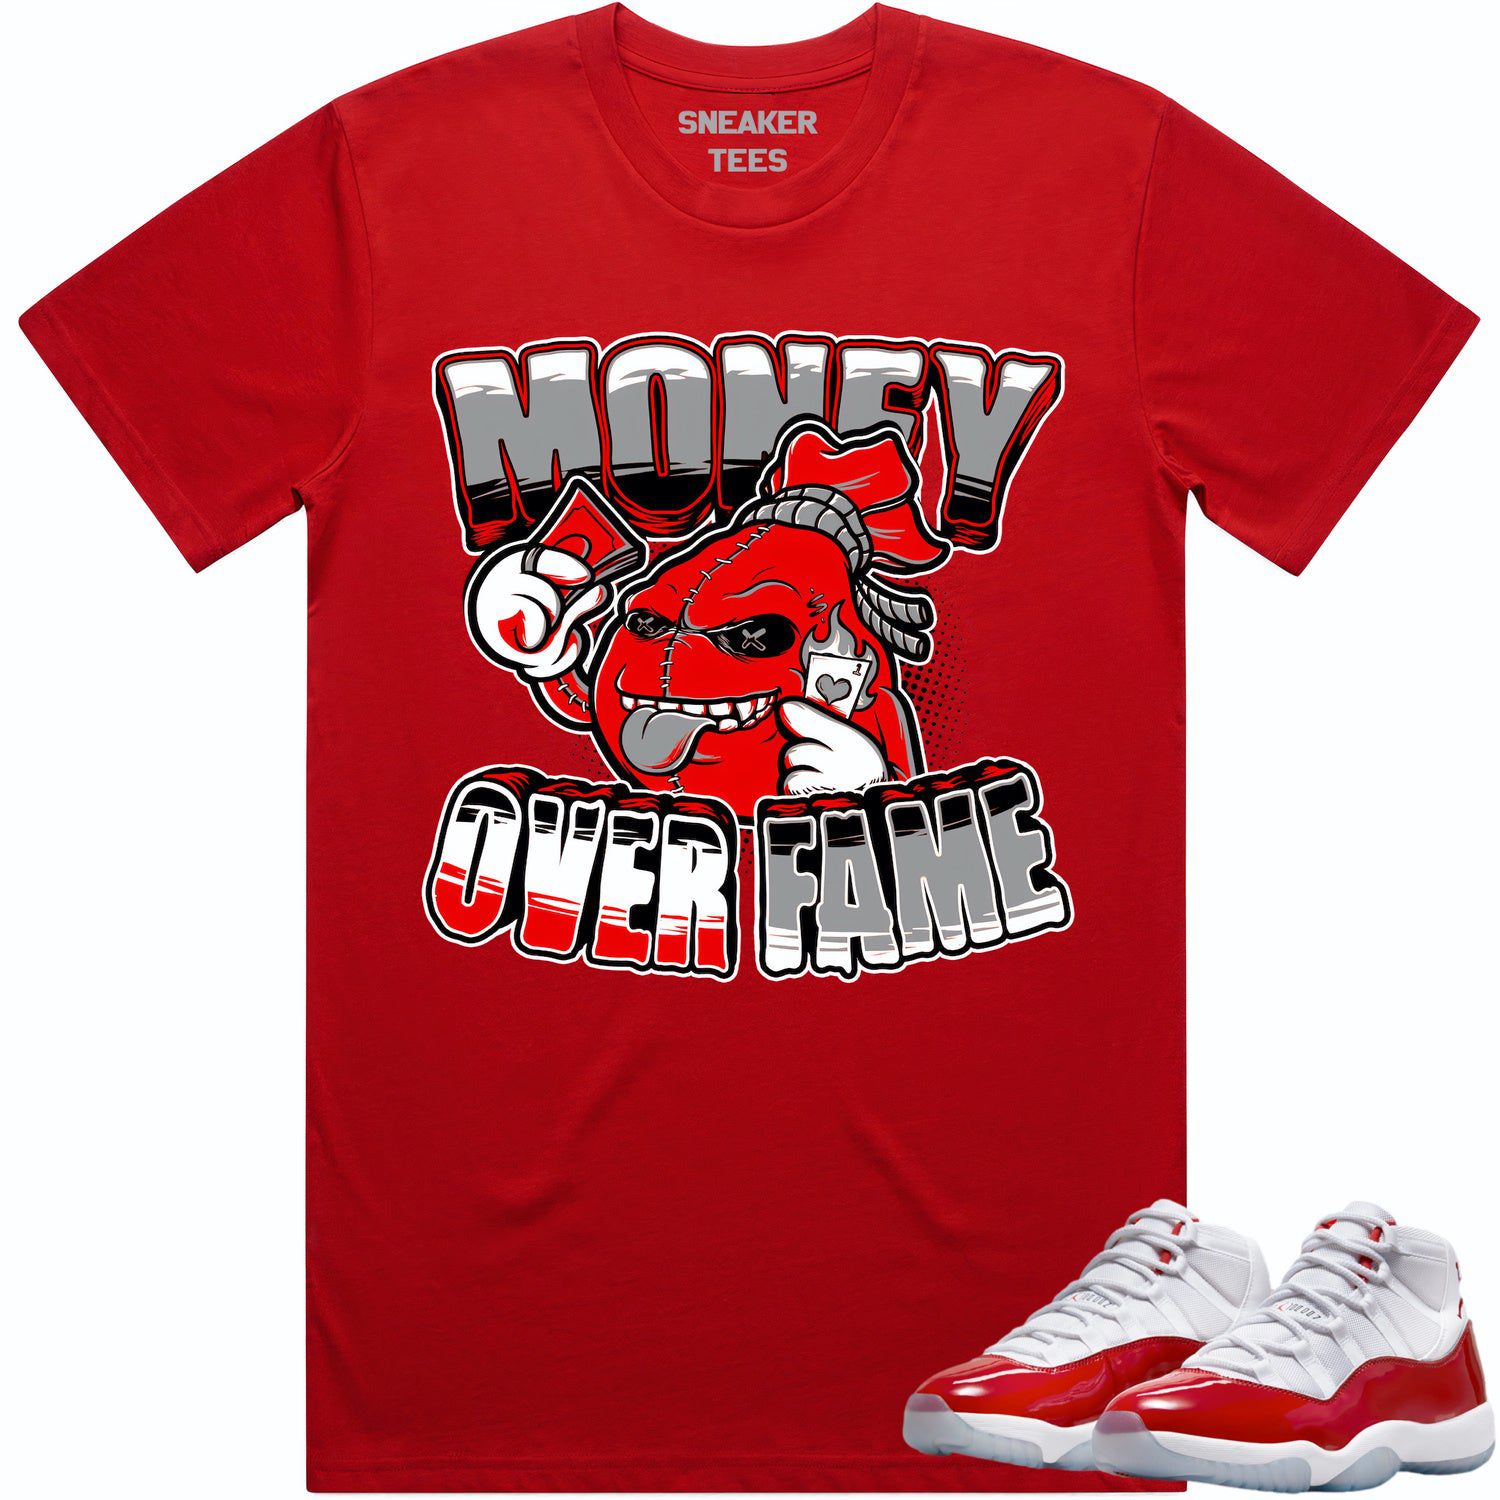 Cherry 11s Shirt - Jordan Retro 11 Cherry Shirts - Red Money over Fame